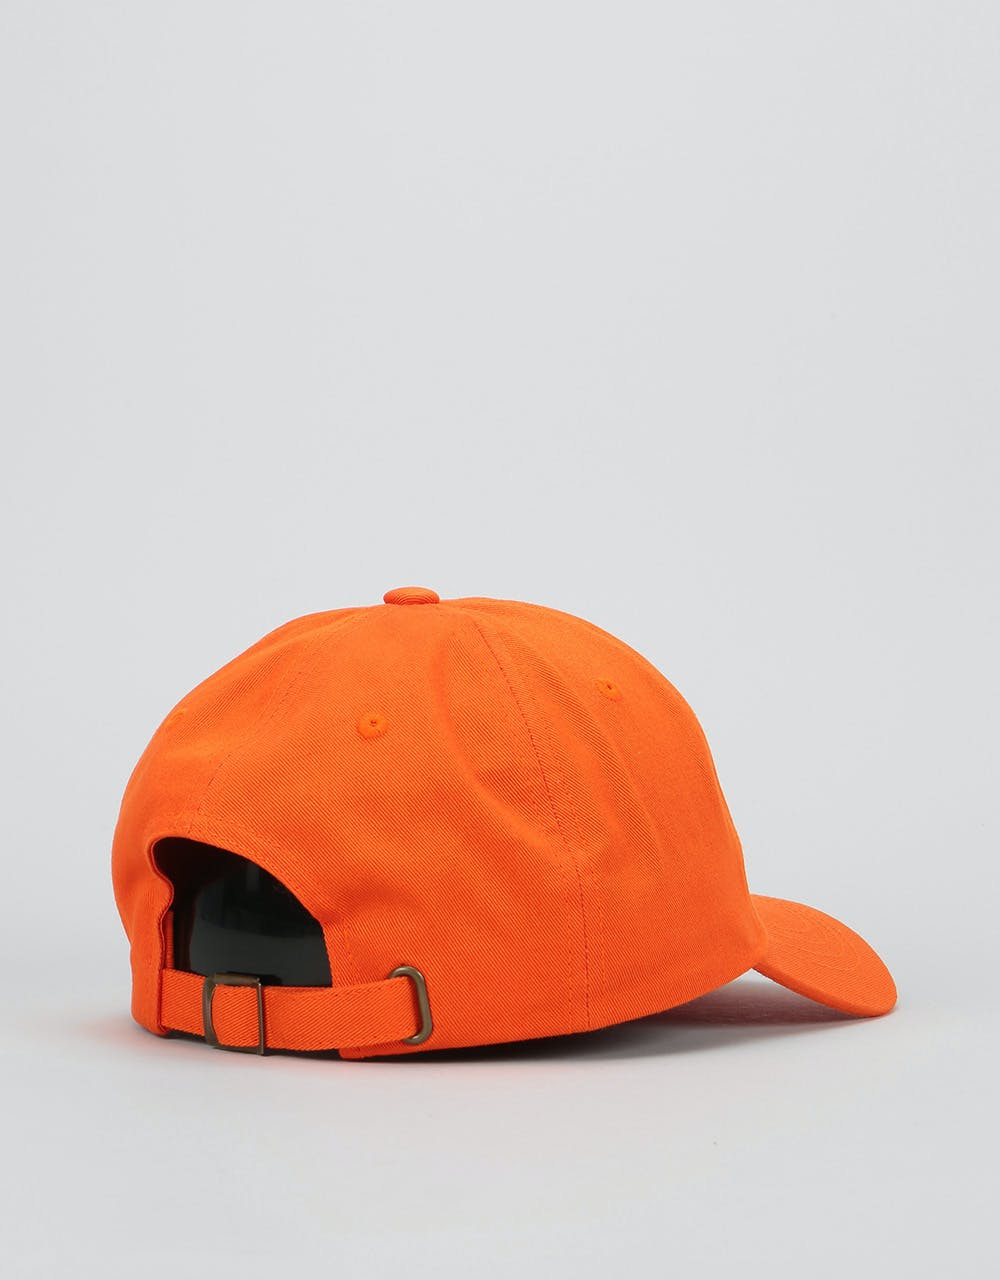 Welcome Scrawl Unstructured Slider Cap - Orange/Black